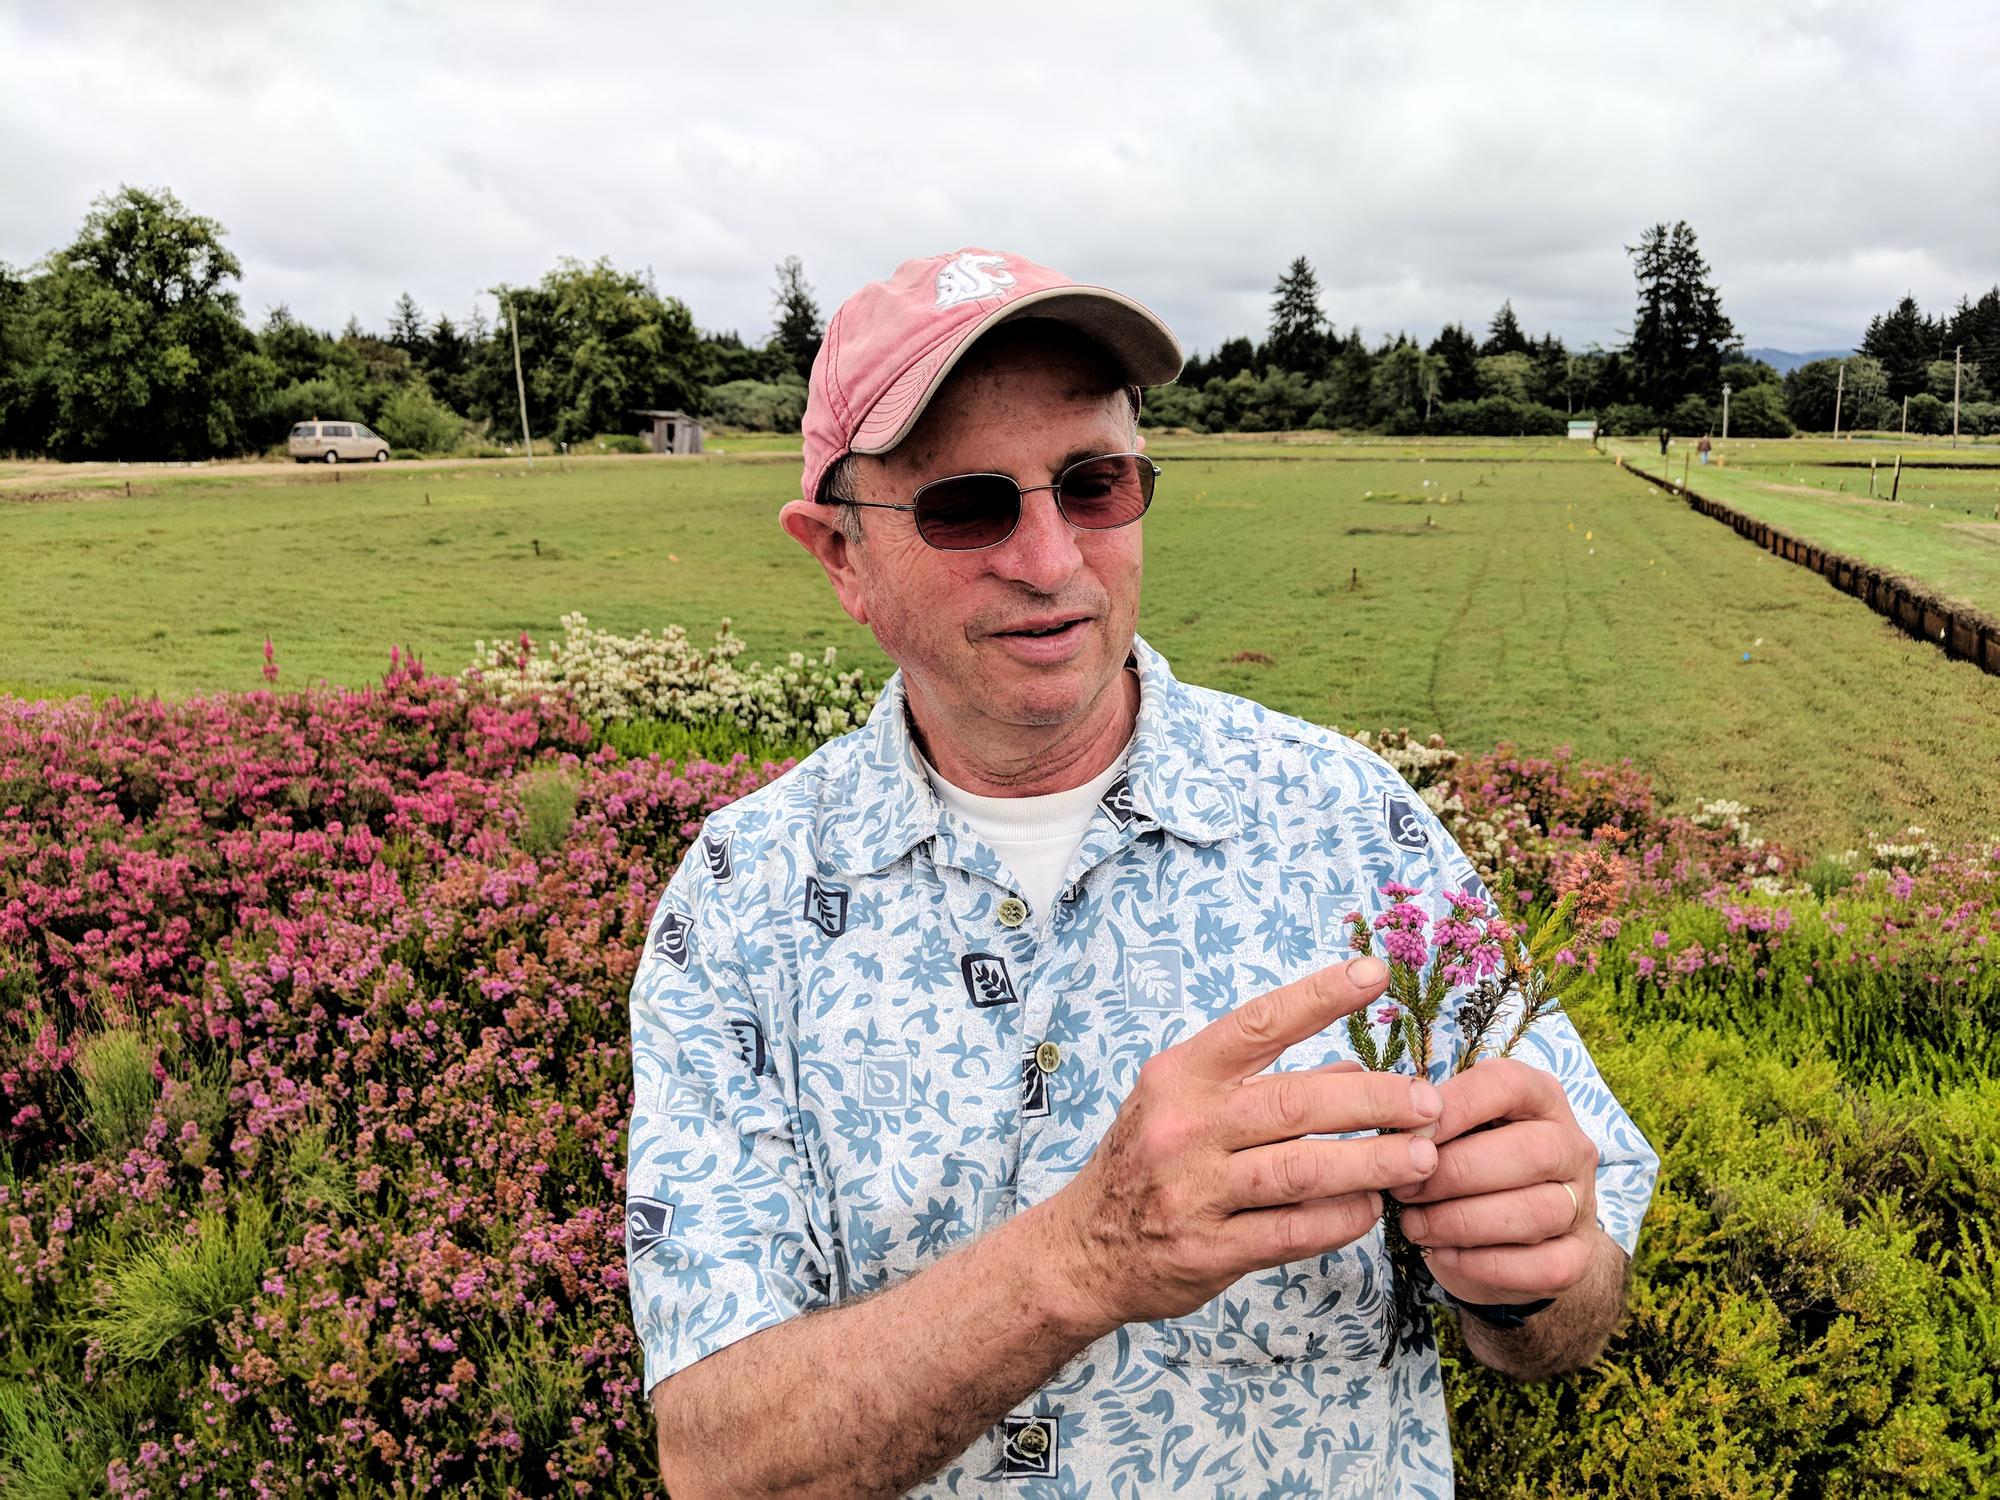 Man in ballcap holds heather sprigs